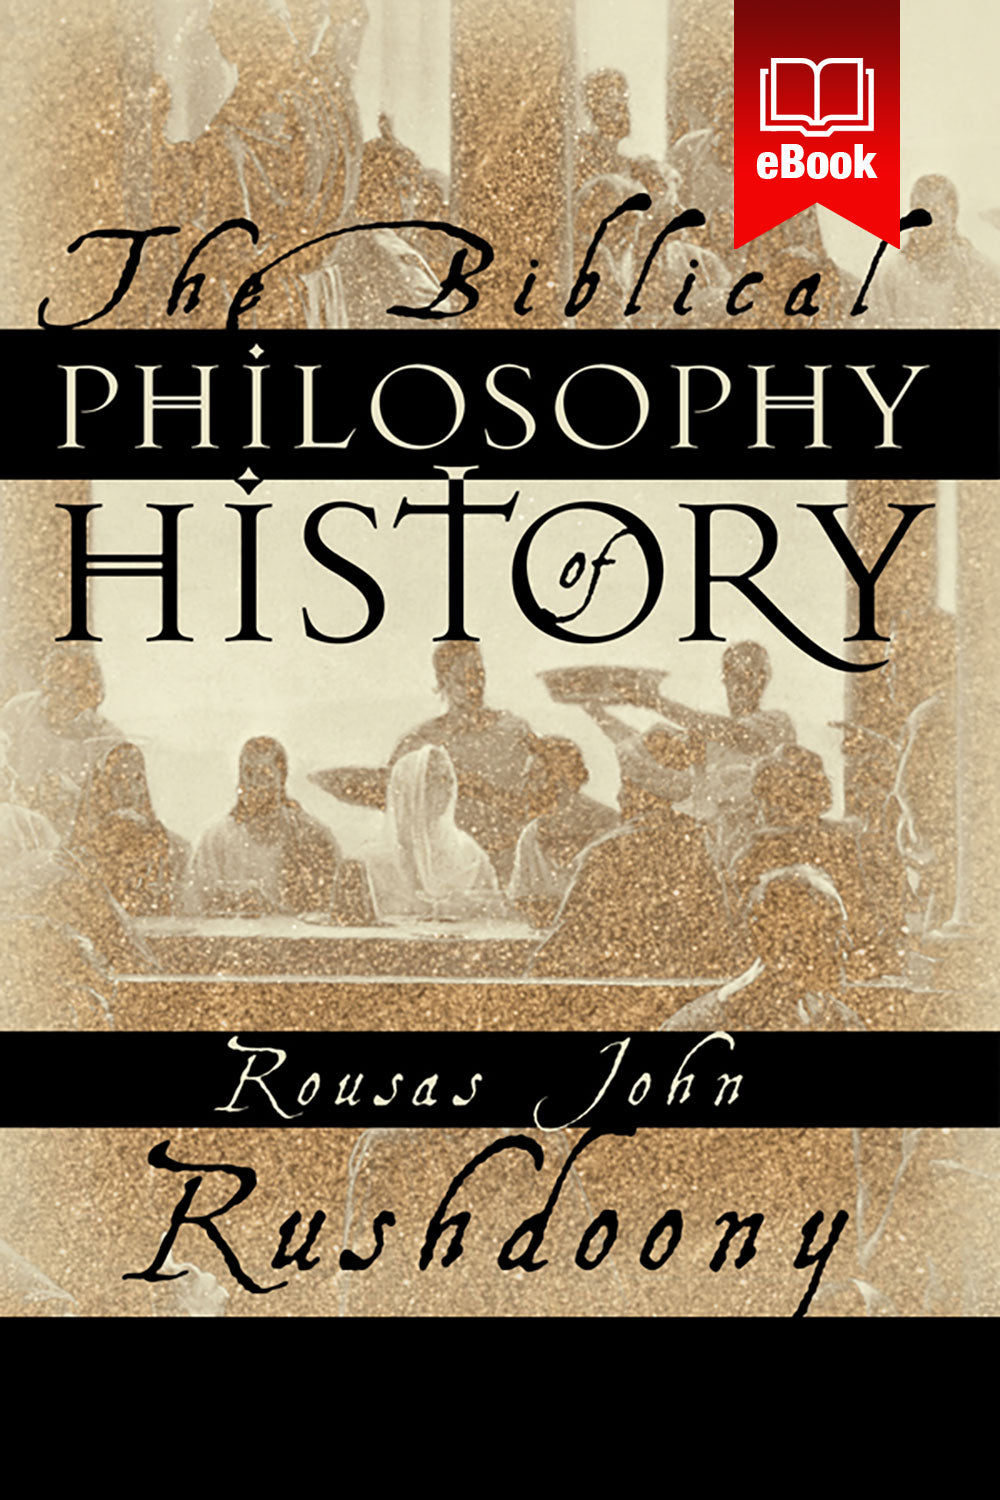 Biblical Philosophy of History